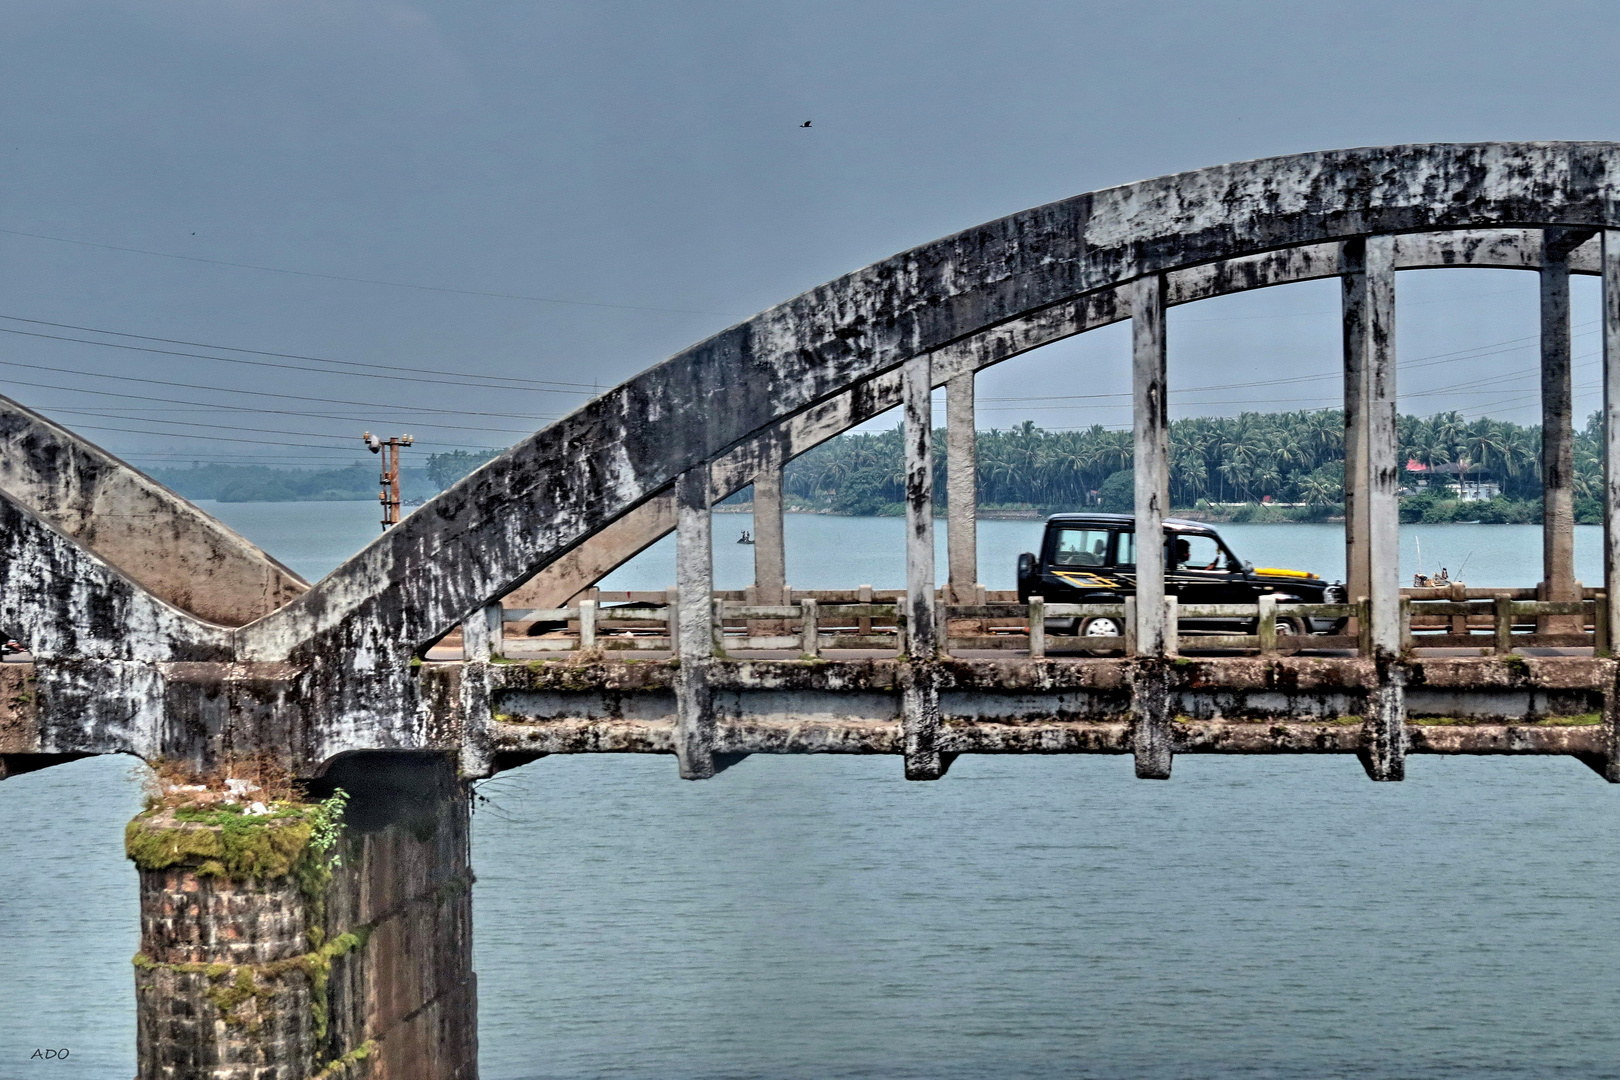 The Bridge to Mangalore